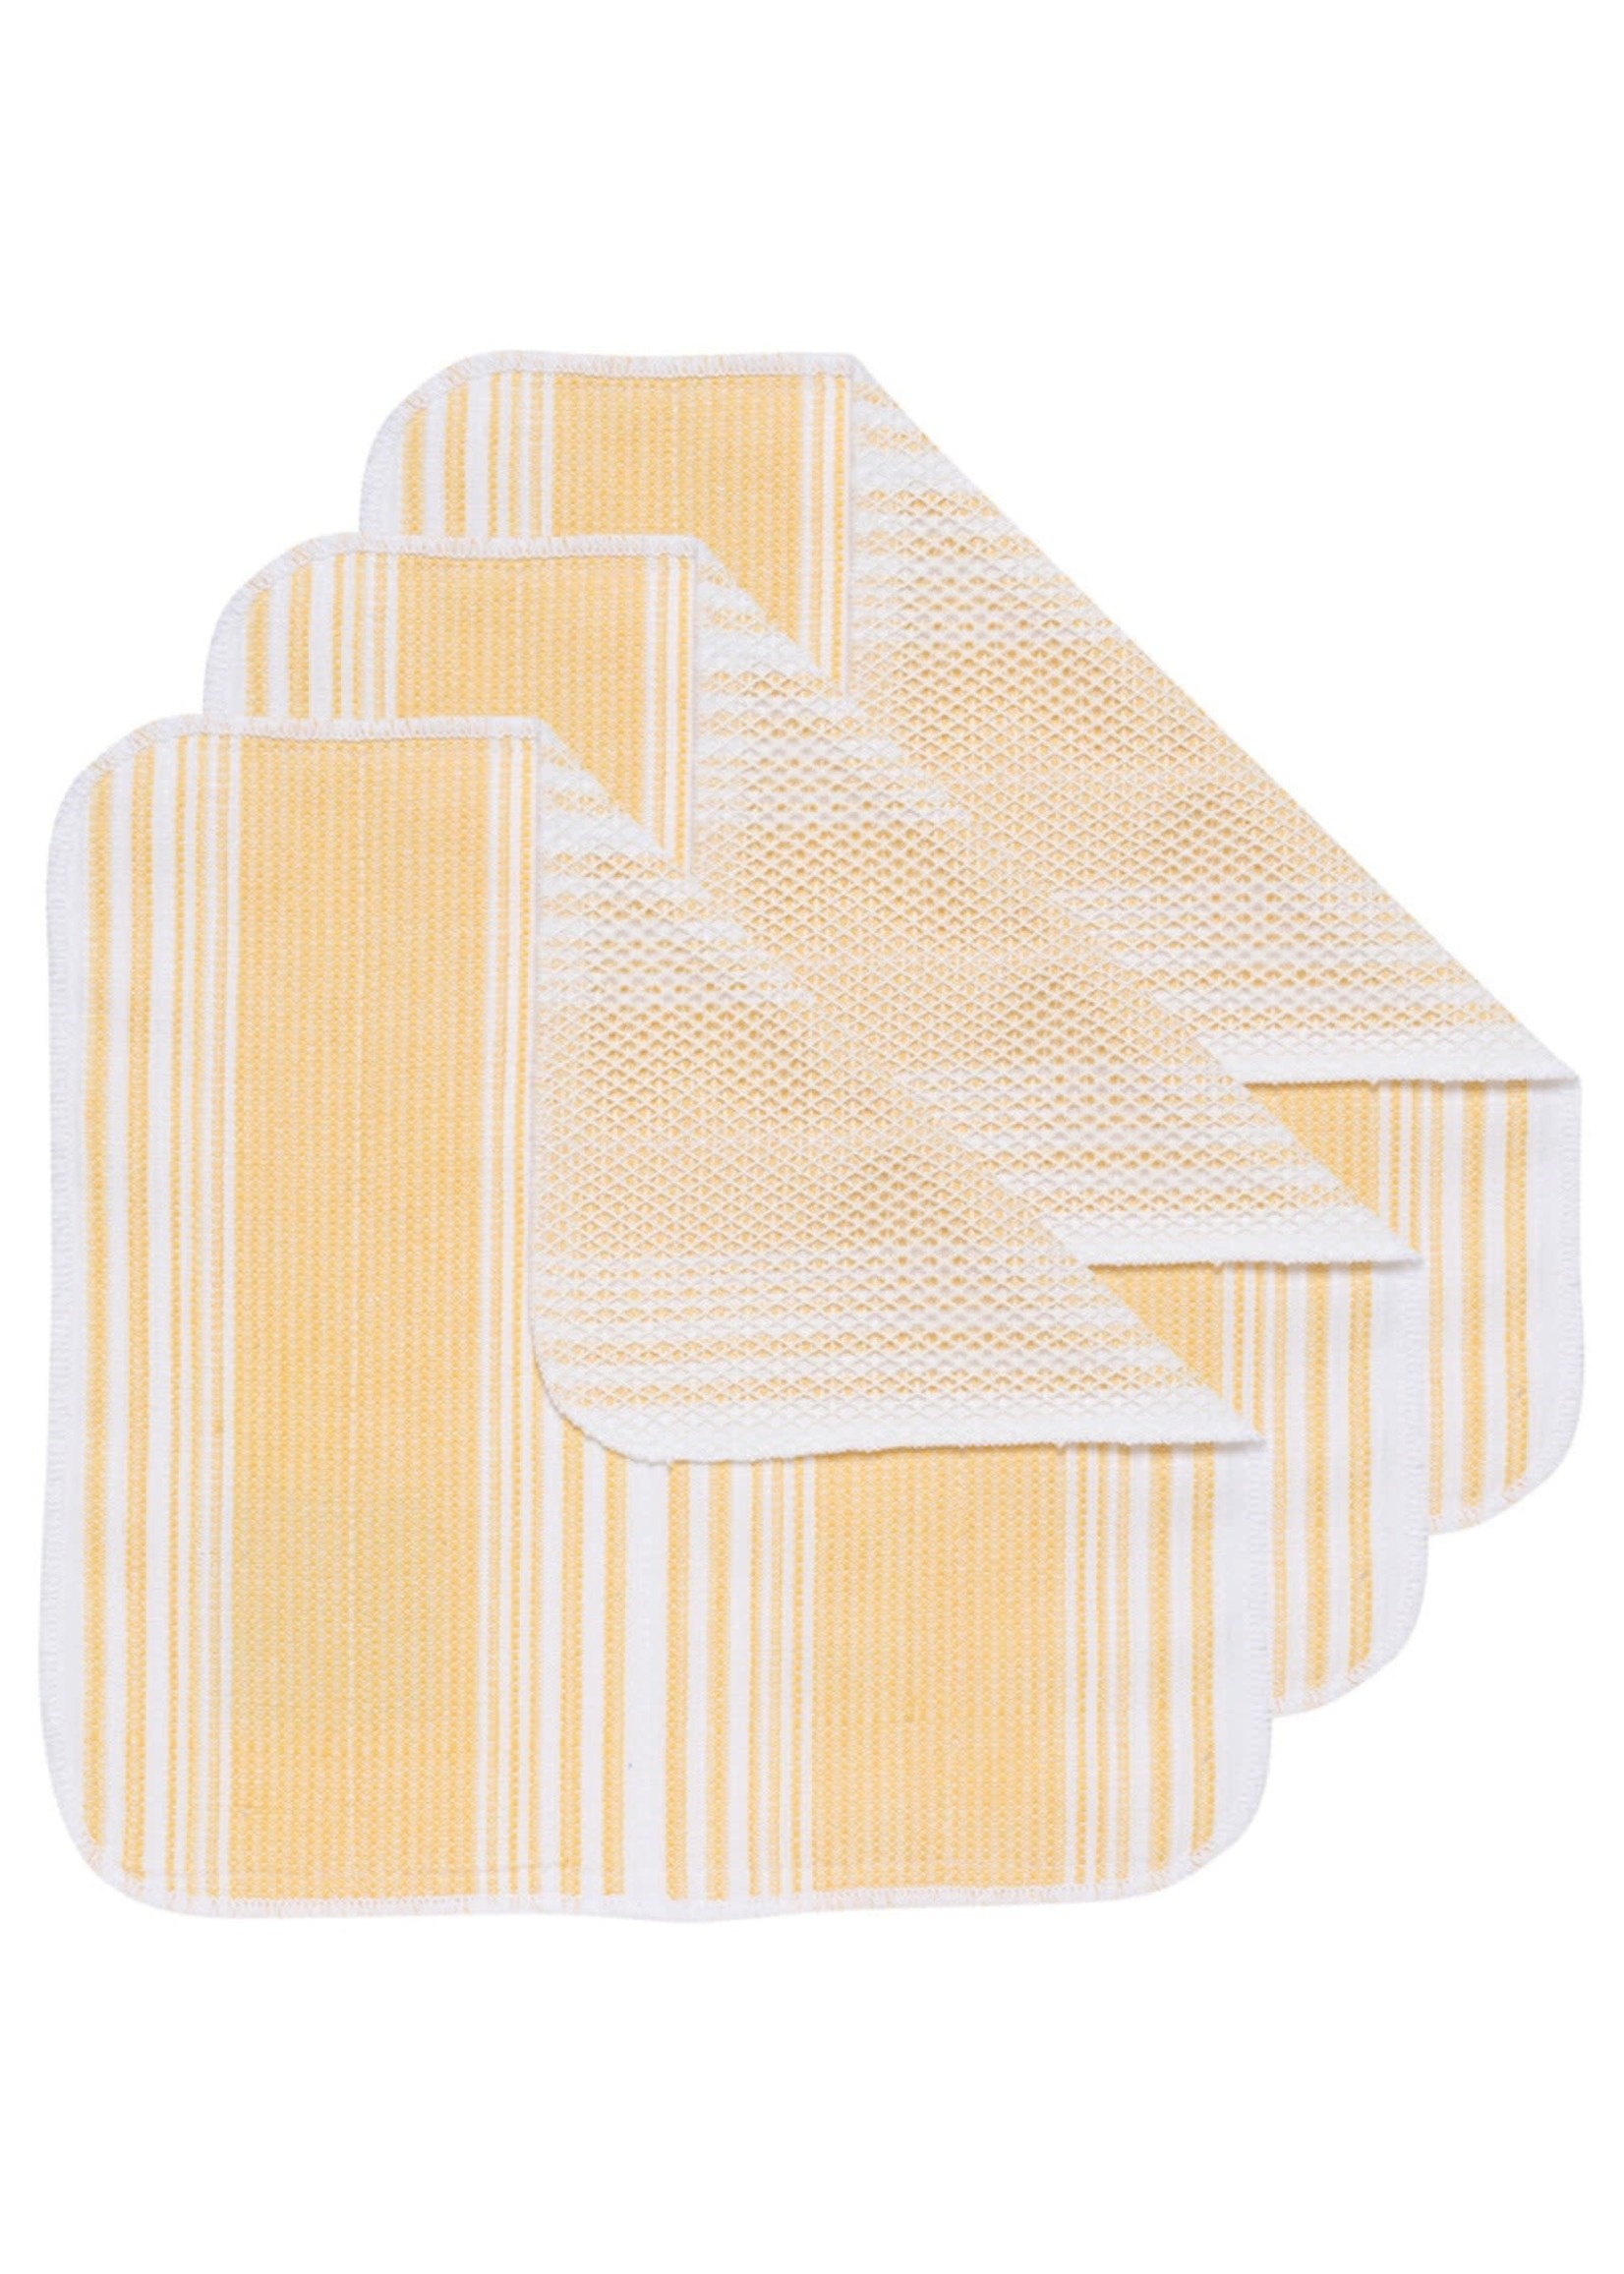 Scrub It Dishcloth Set of 3 in Lemon Yellow